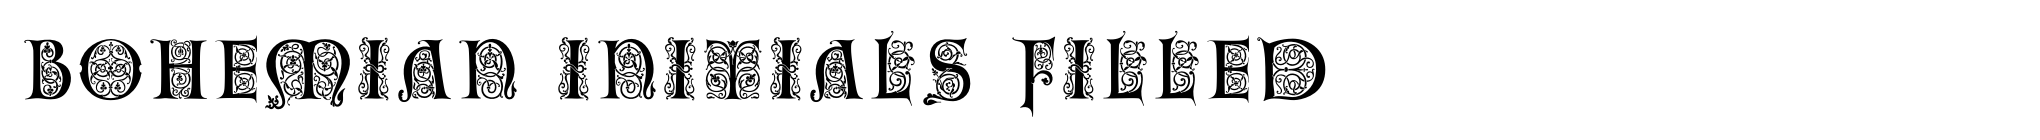 Bohemian Initials Filled image